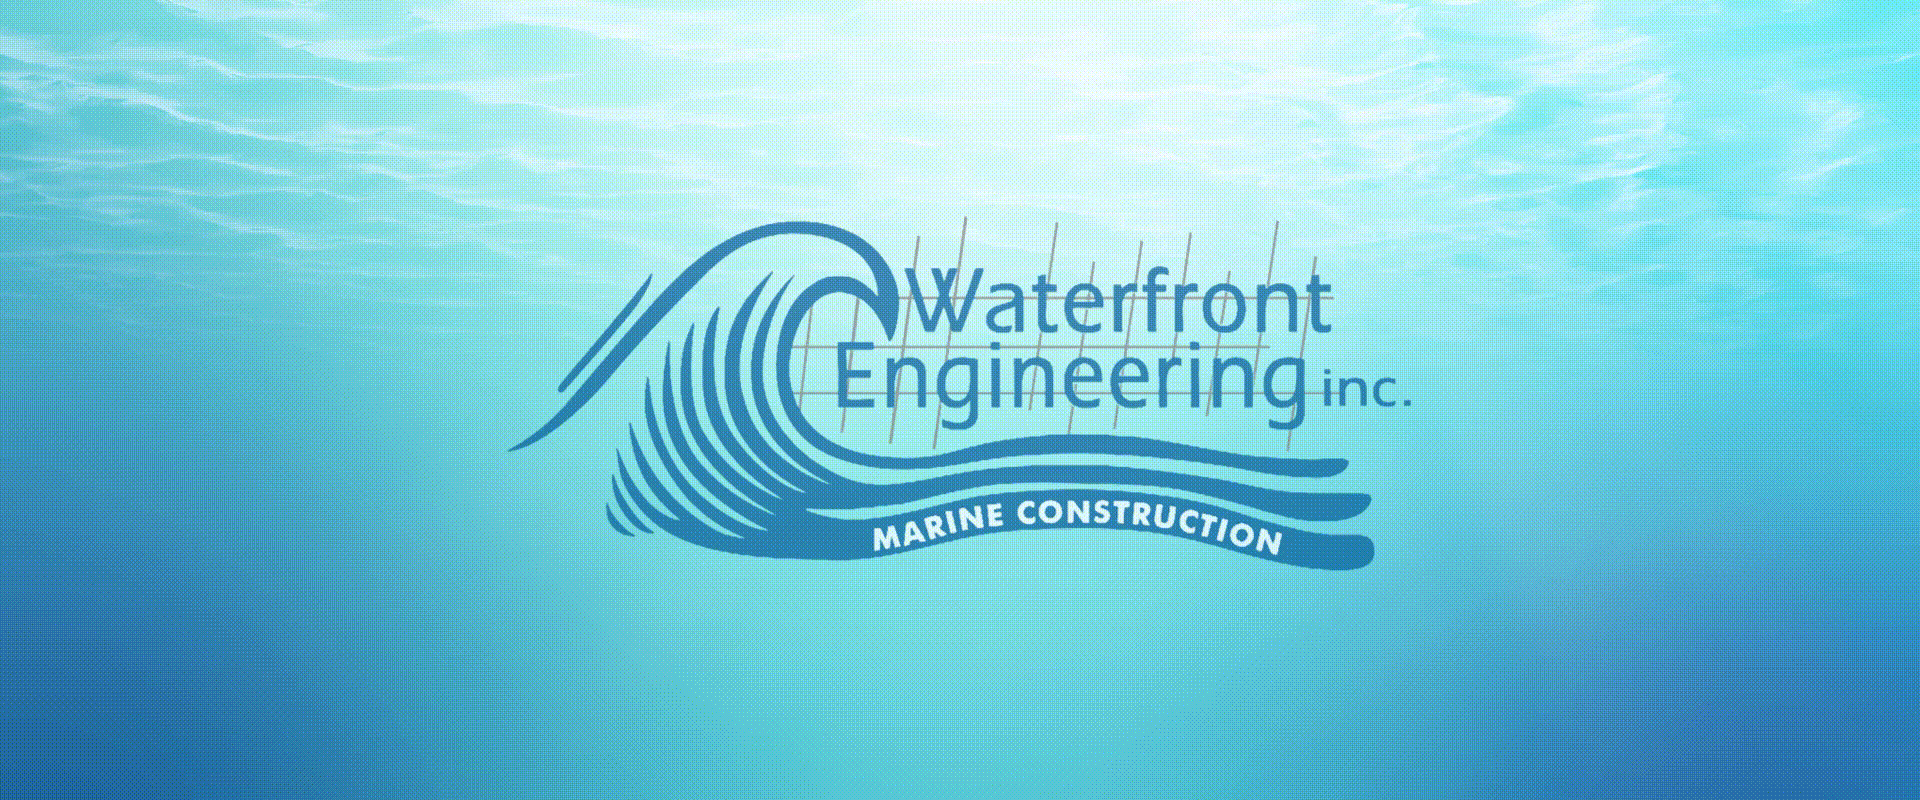 Waterfront Engineering Logo Gif